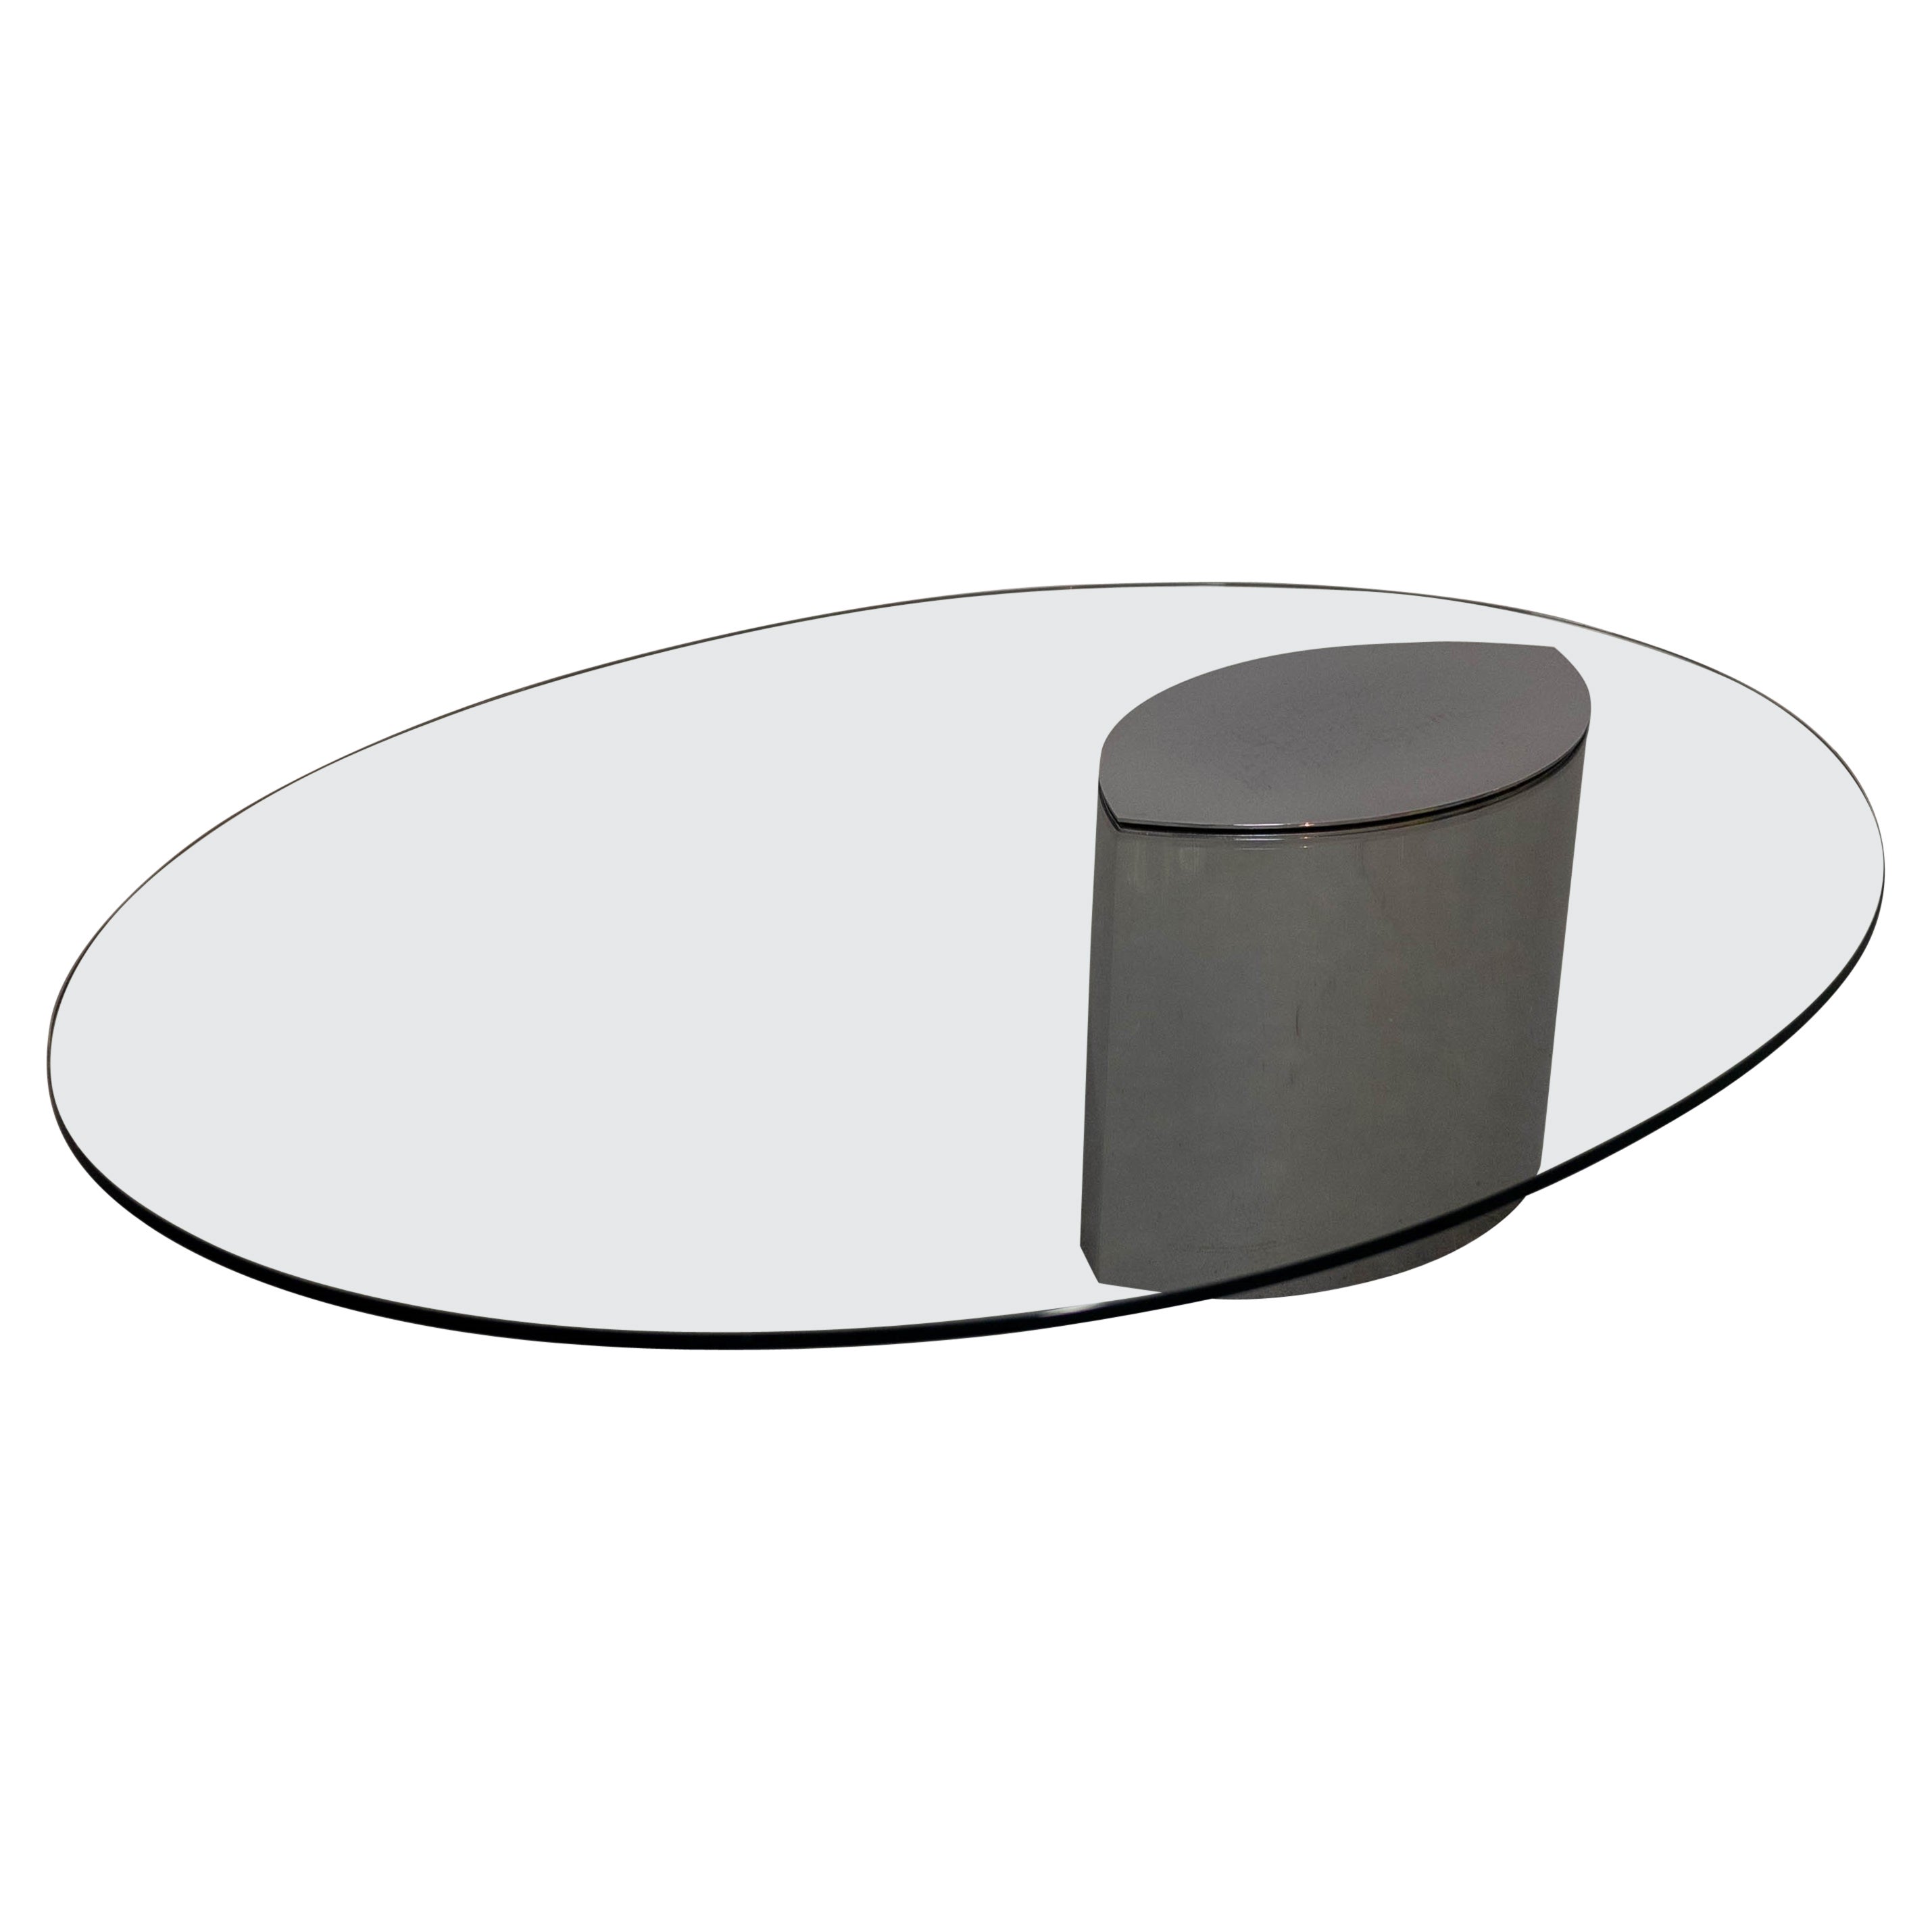 Cini Boeri „Lunario“ Tisch für Gavina